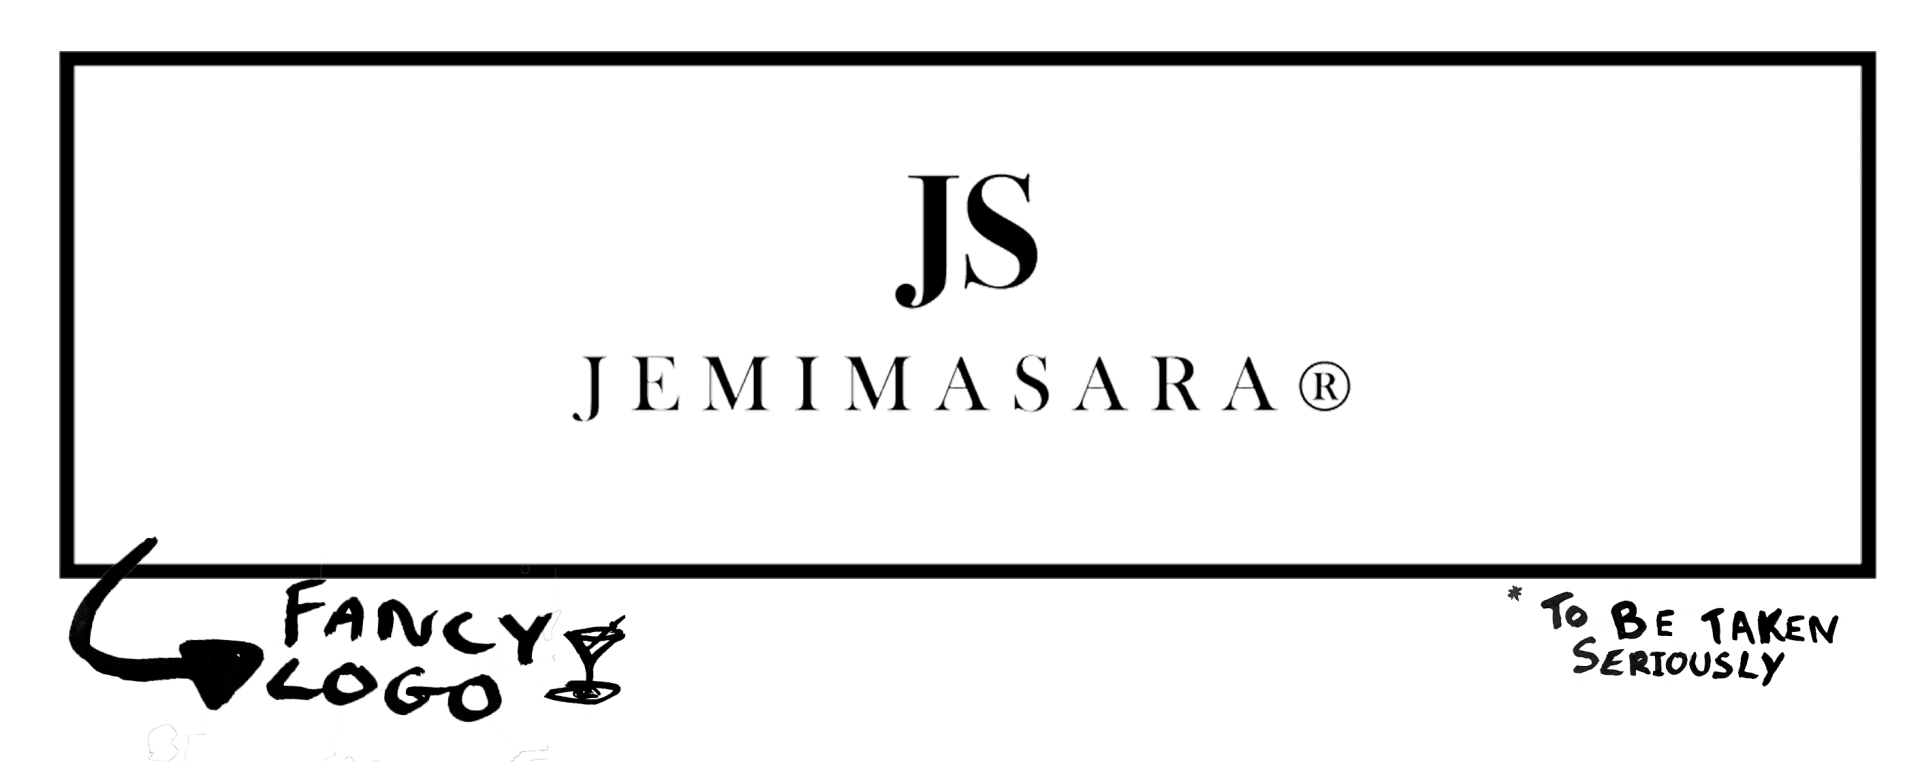 JemimaSara company logo, JEMIMASARA, LOGO